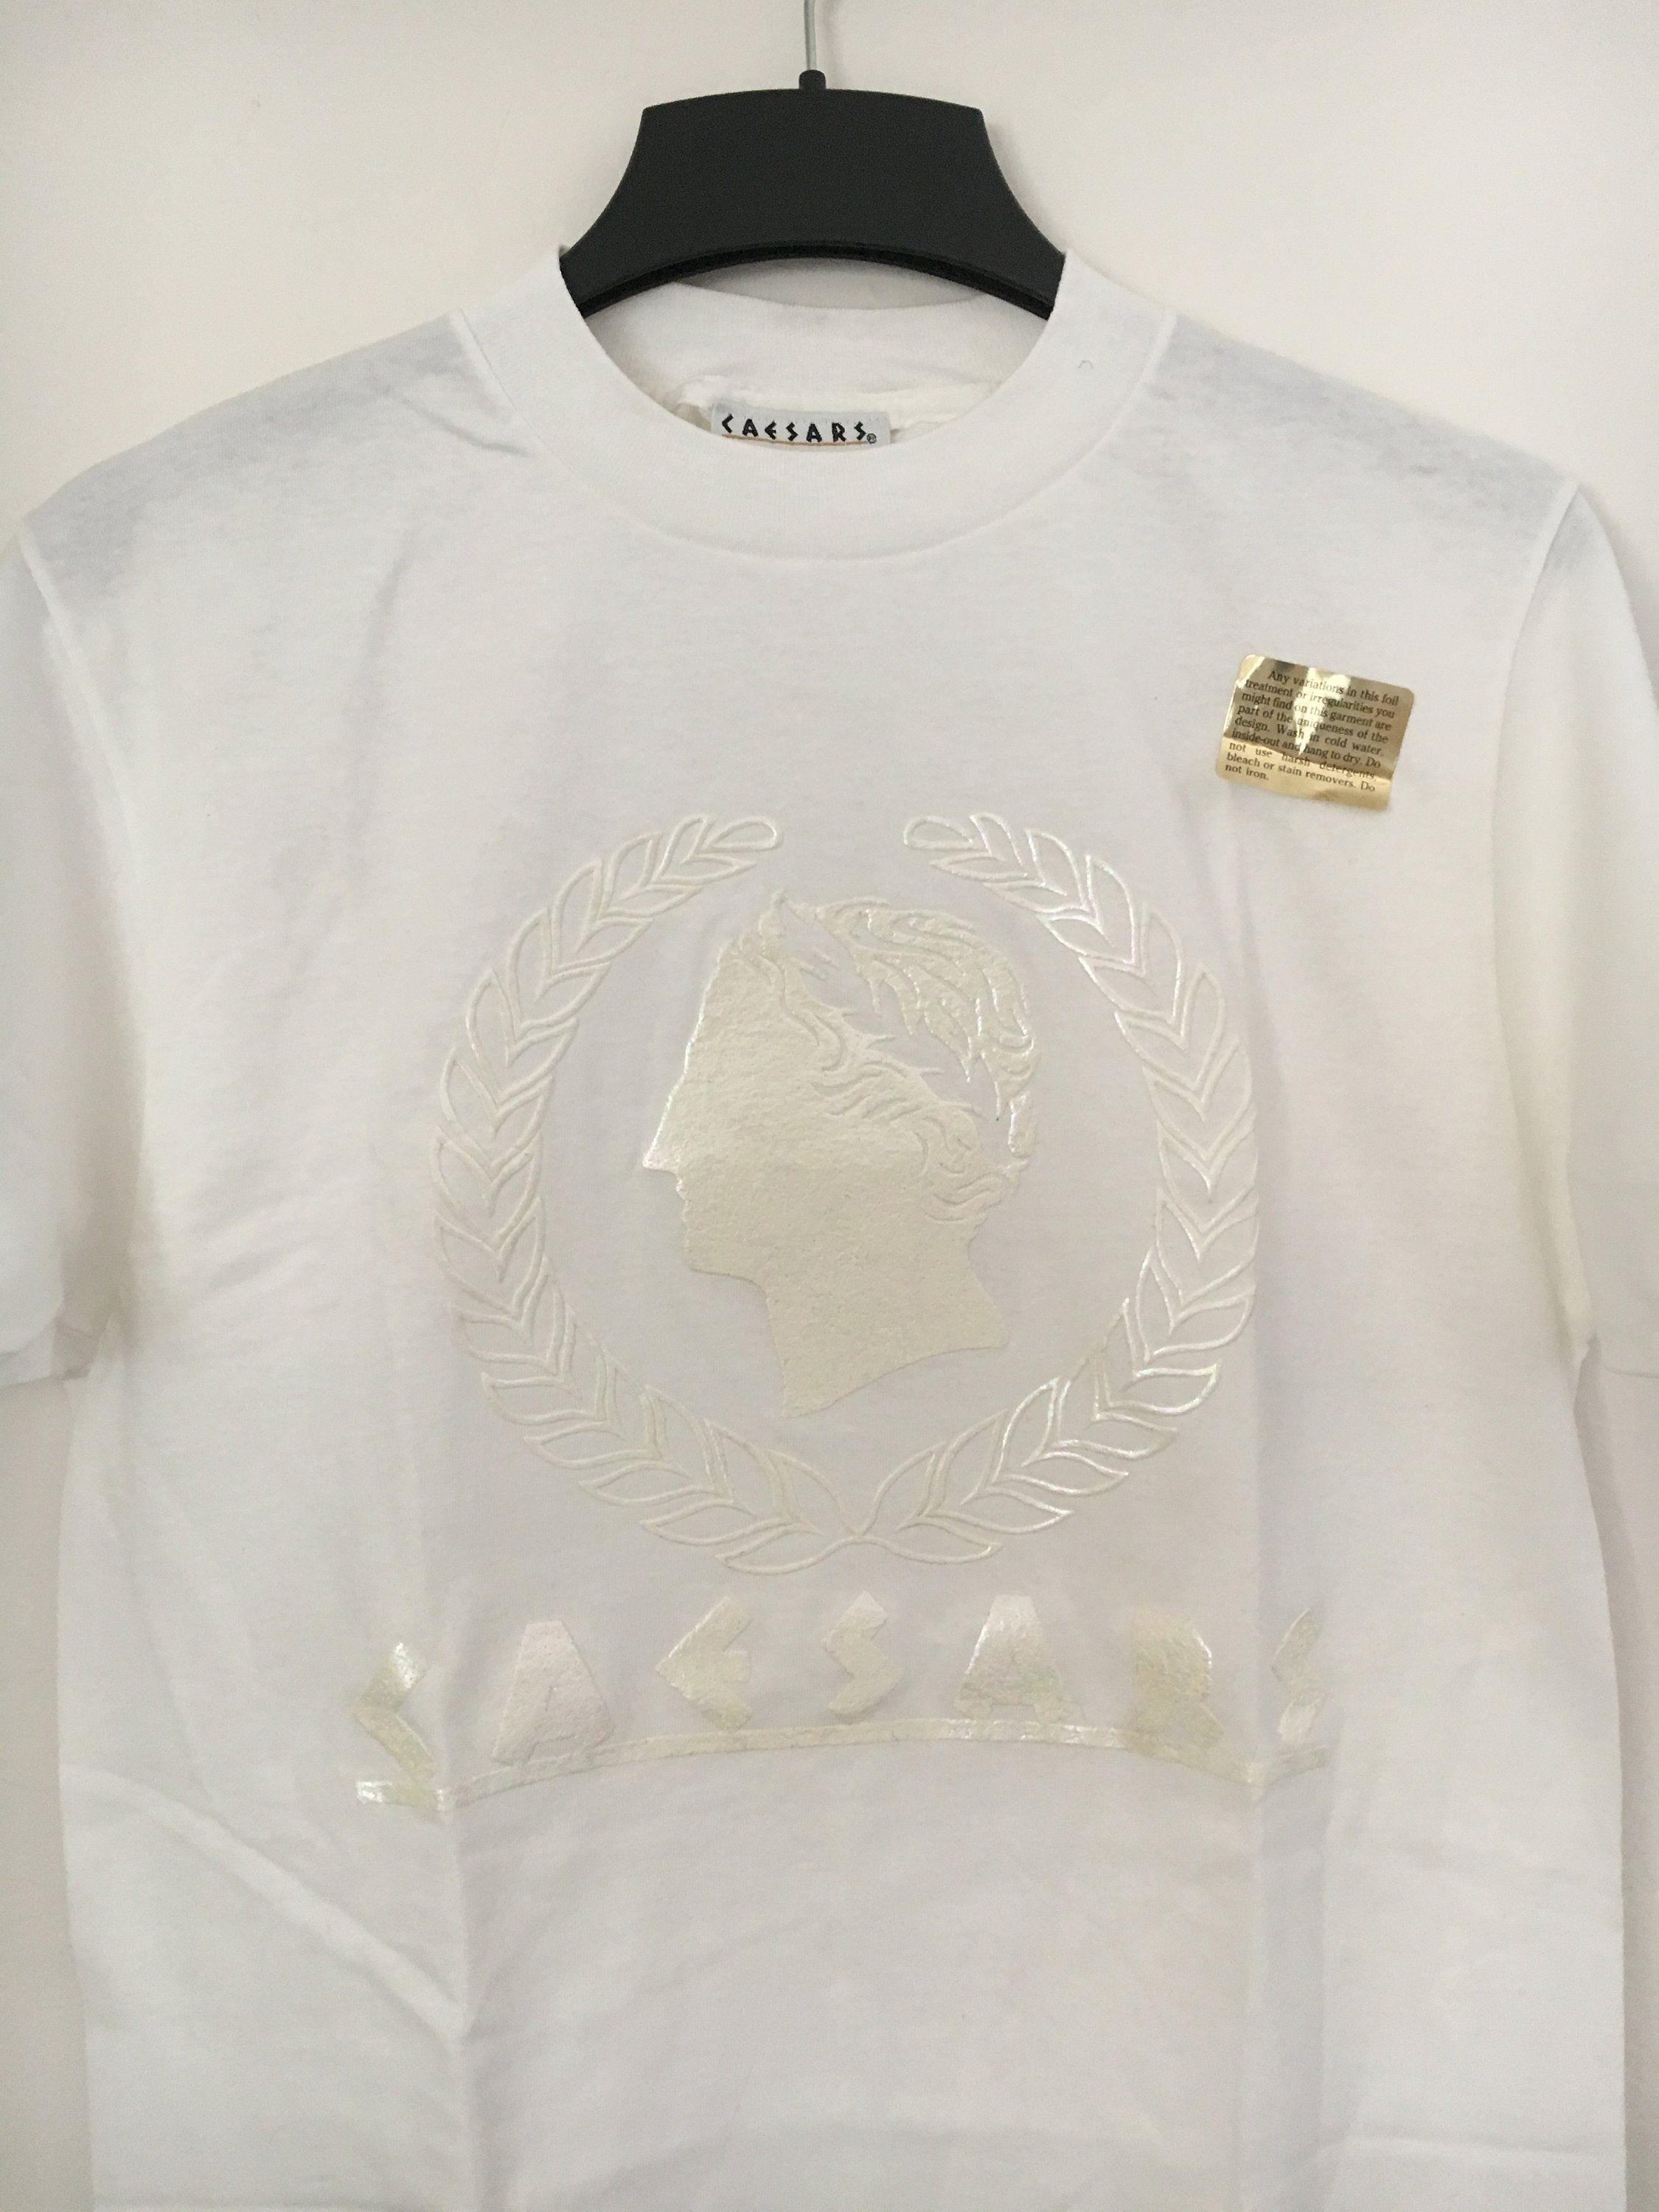 Casesar Palace Shirts Logo - Vintage Men's All White Caesars Palace Vegas T Shirt